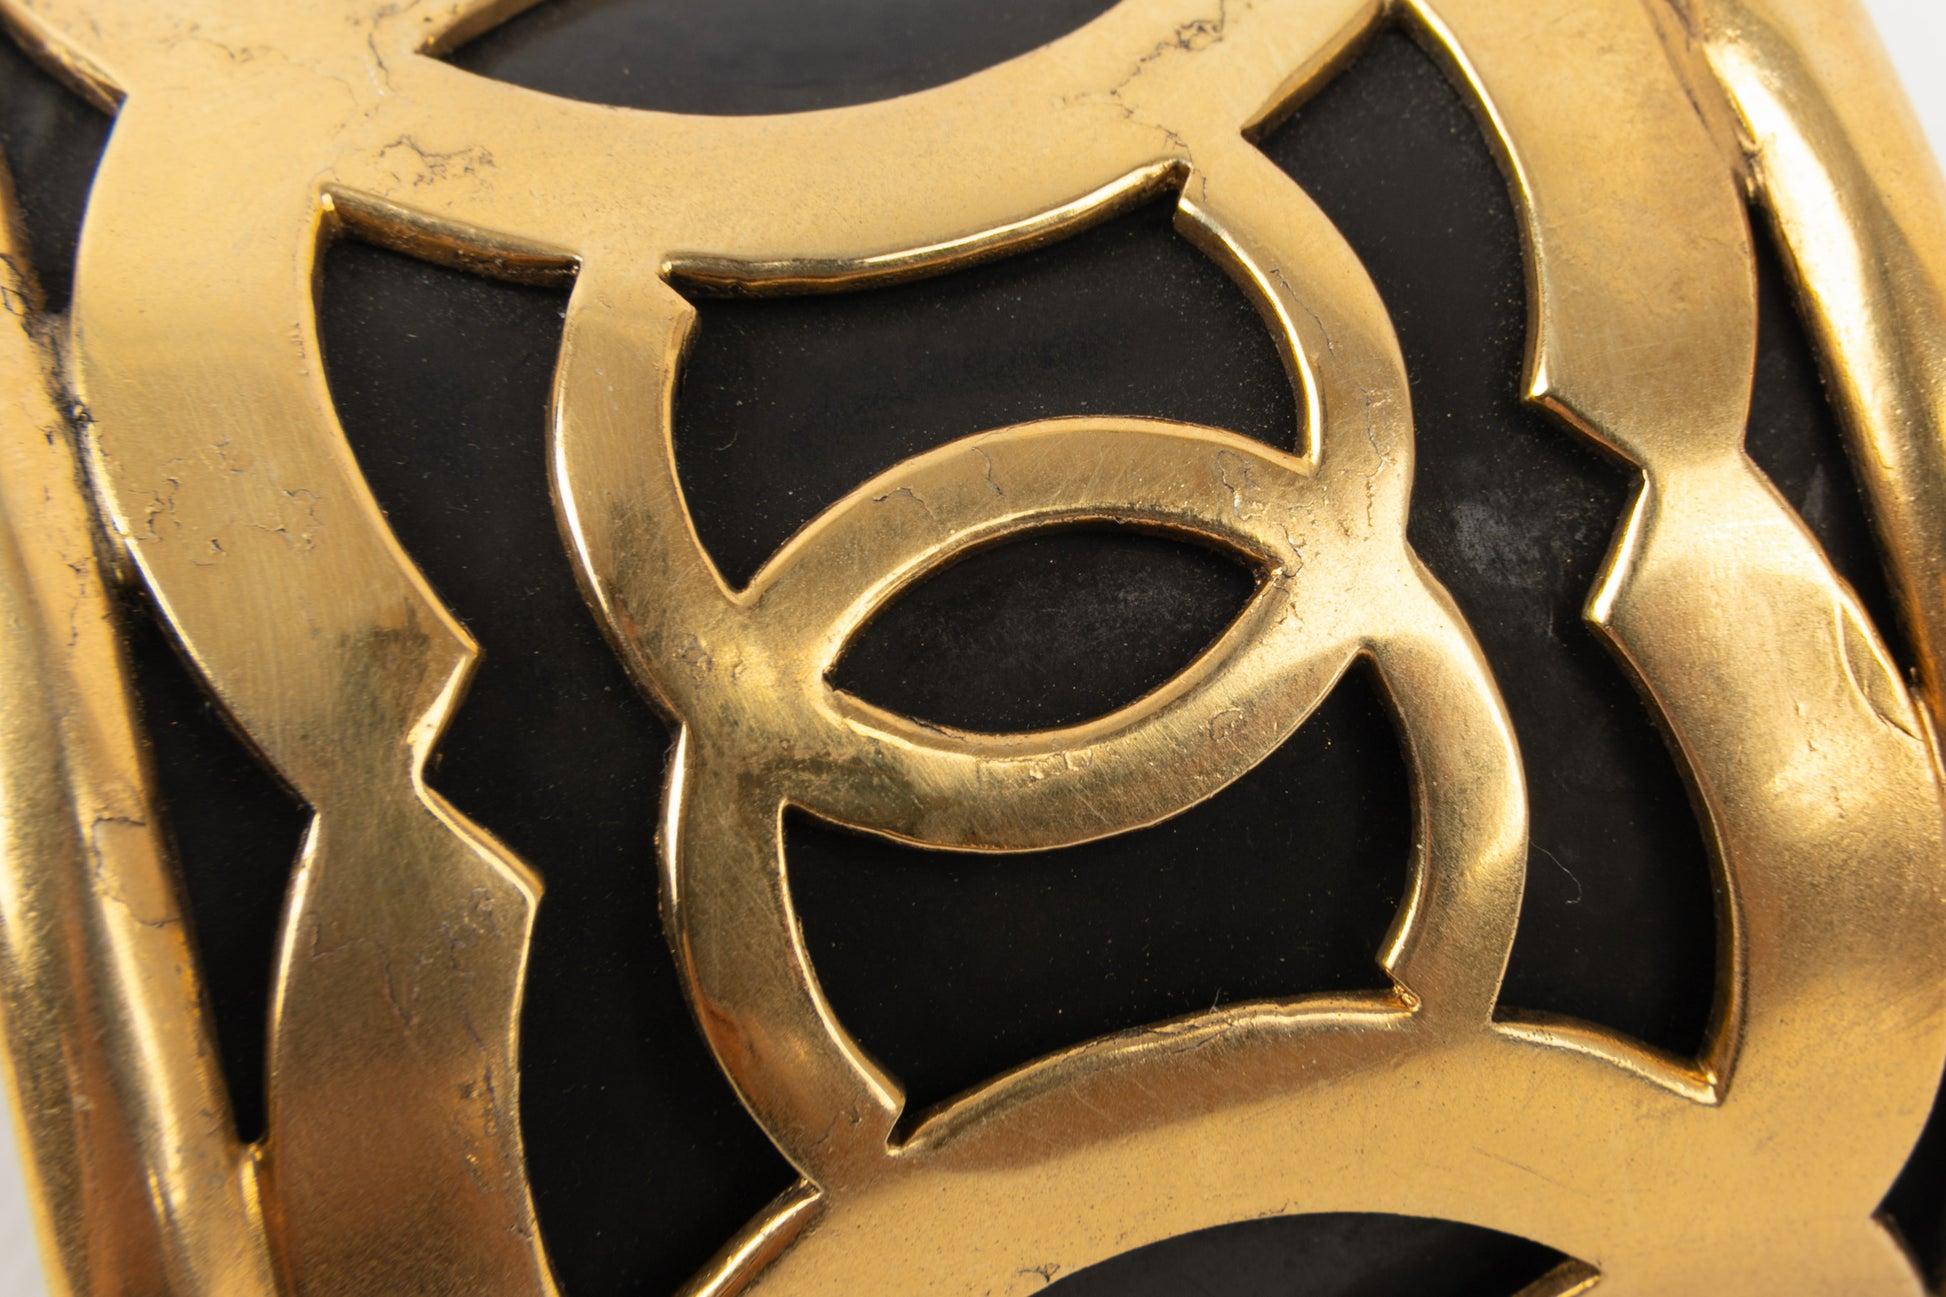 Chanel Cuff Bracelet in Golden Metal on a Black Background For Sale 2